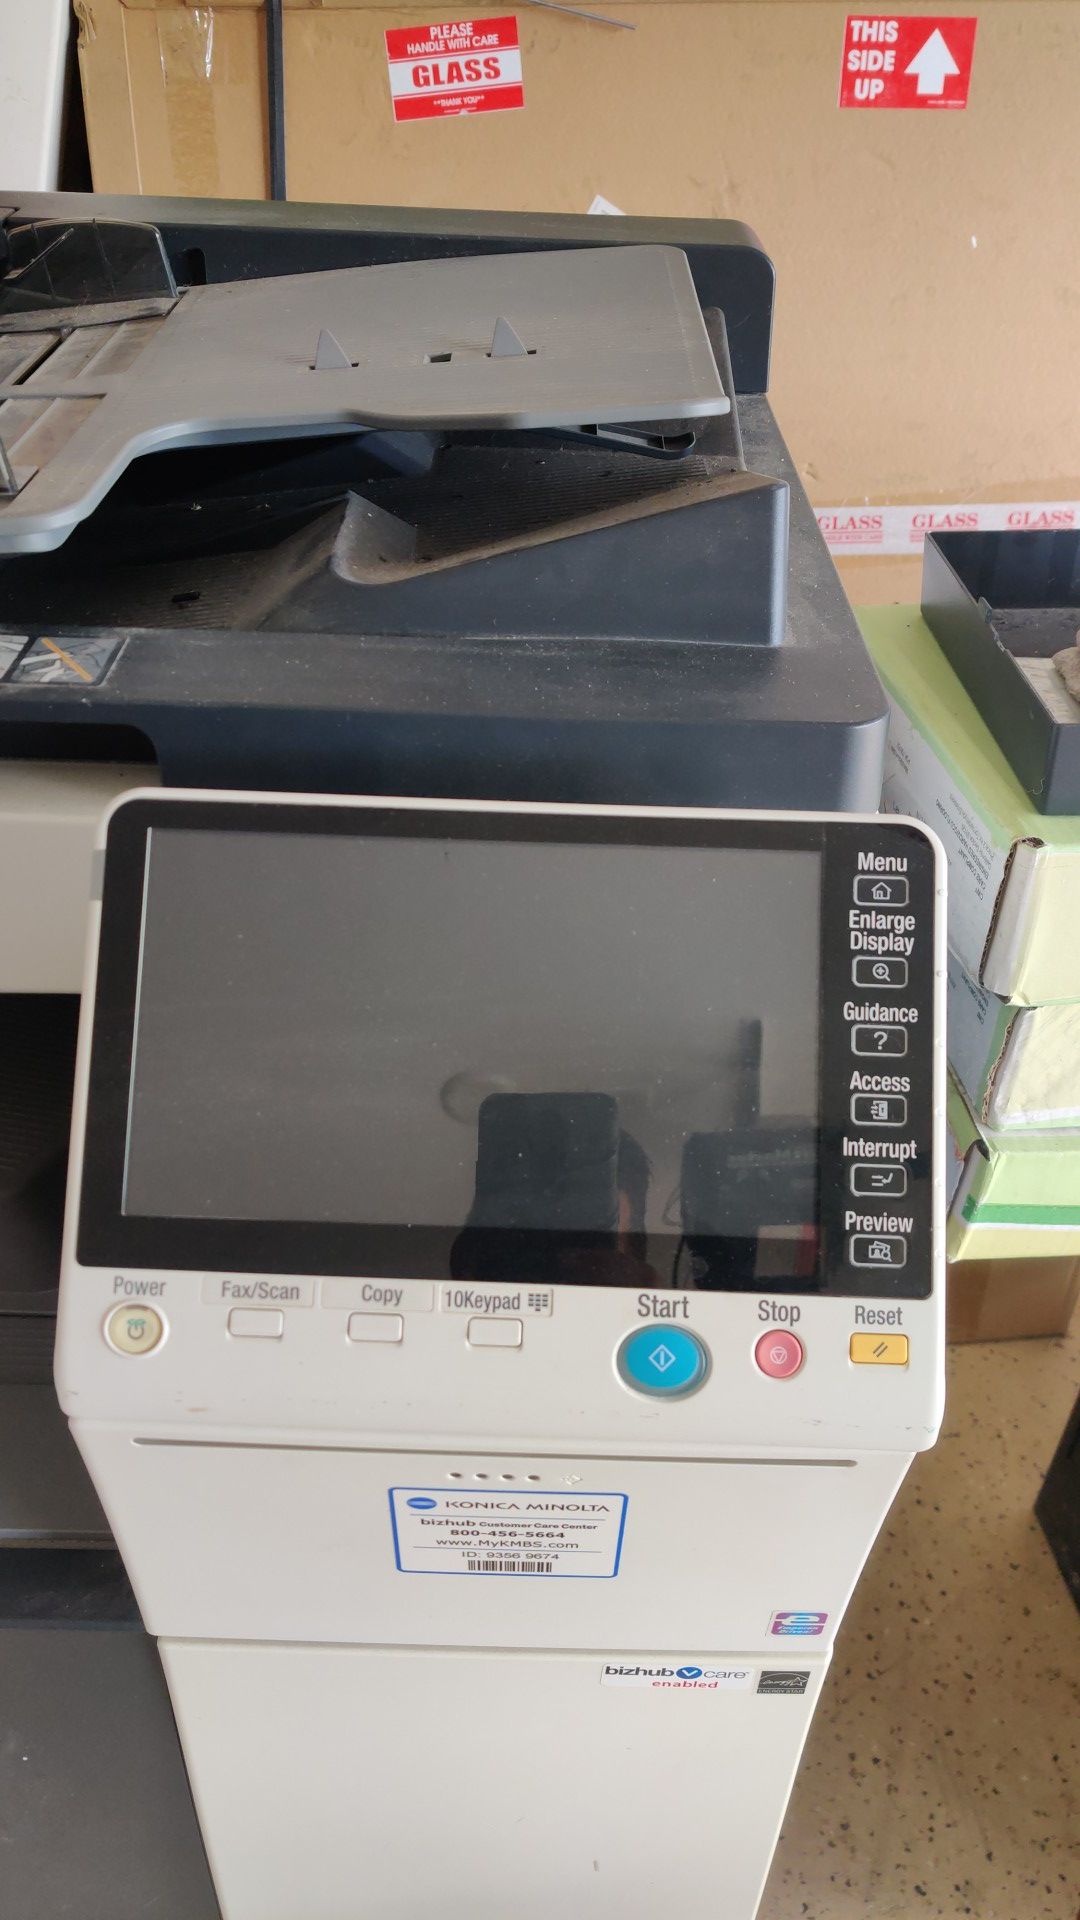 Konica Minolta printer